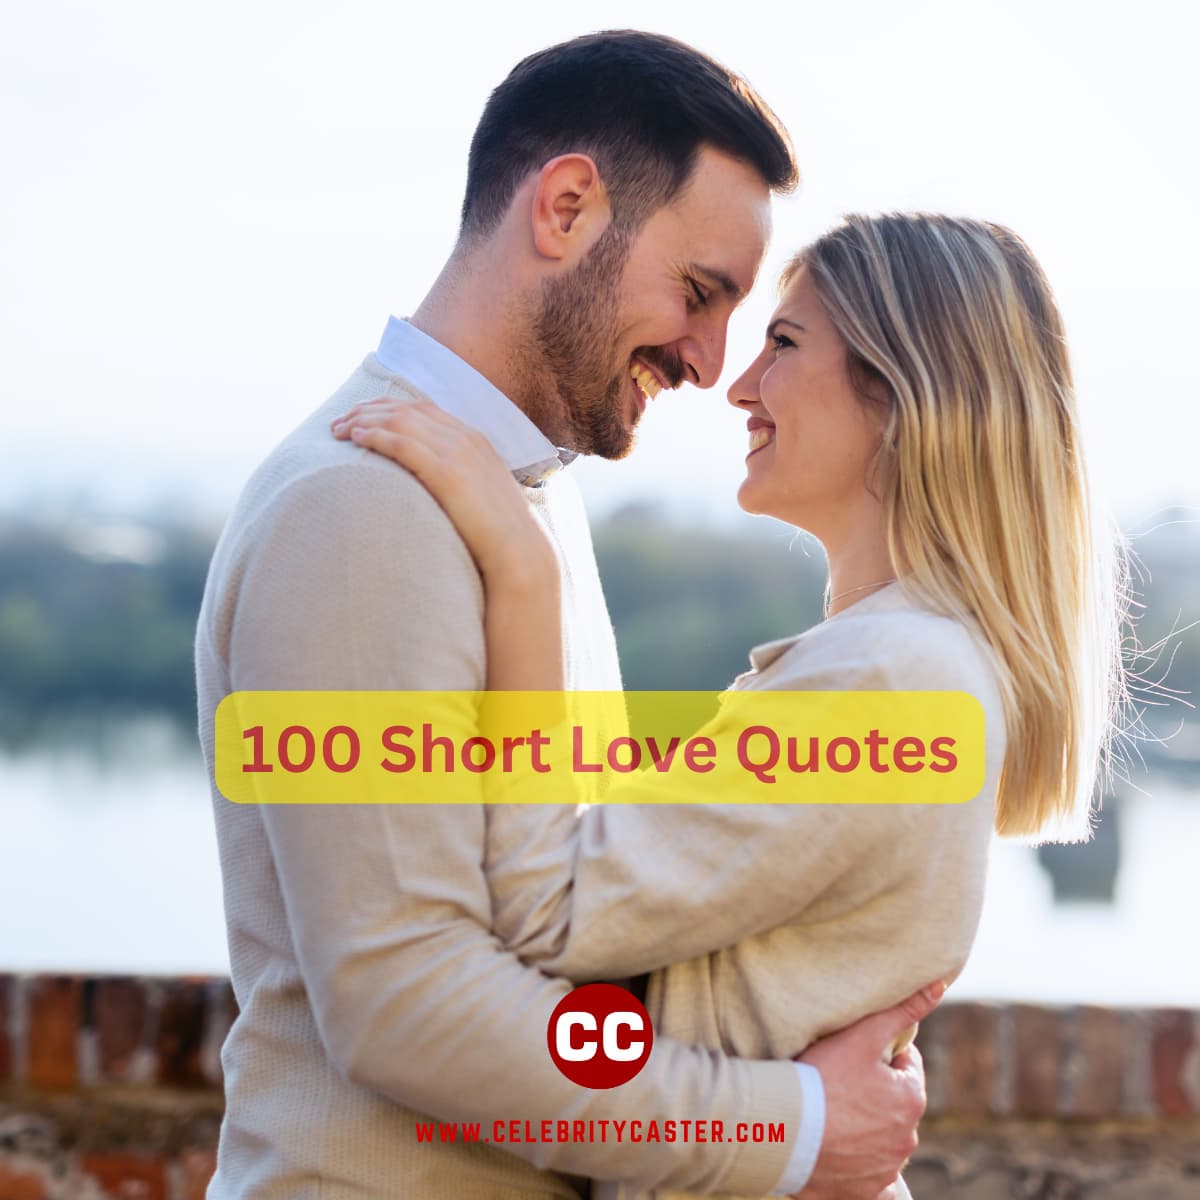 100 Short Love Quotes